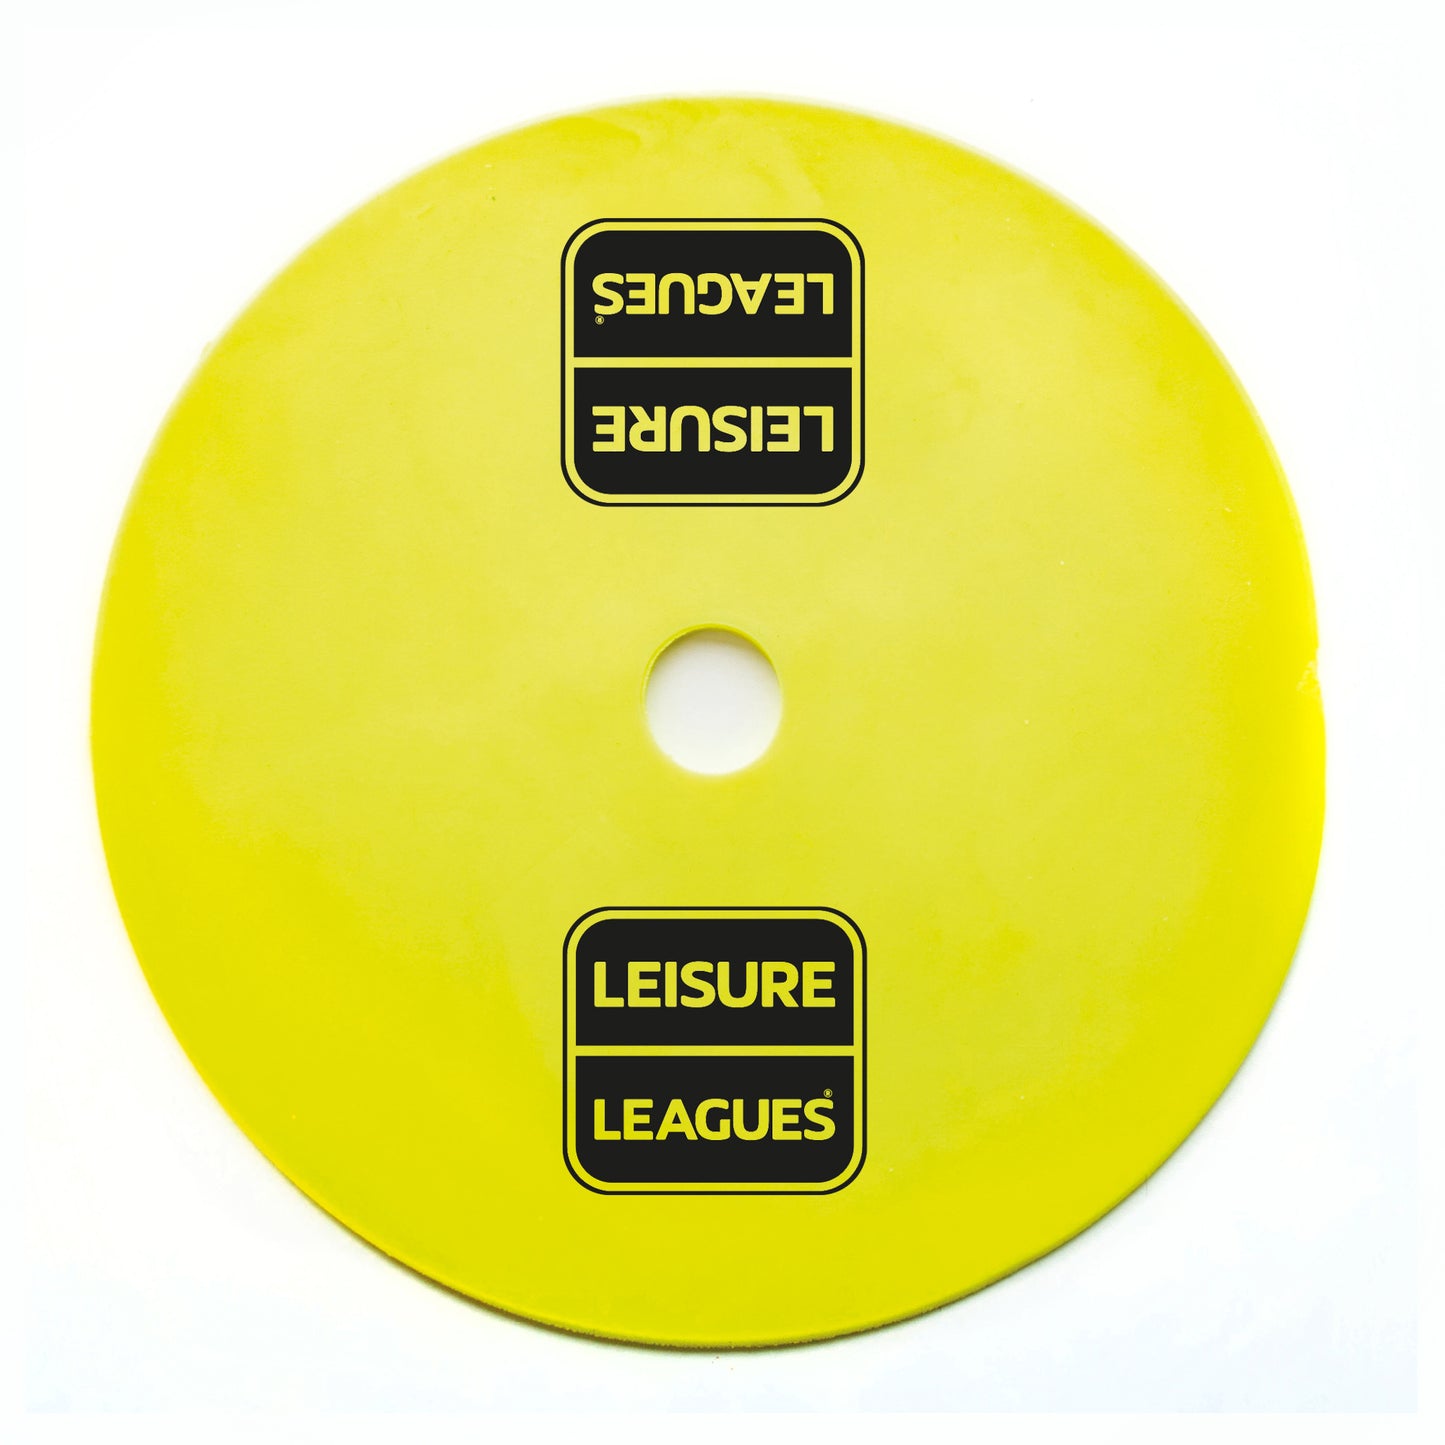 Leisure leagues football Flat Cones